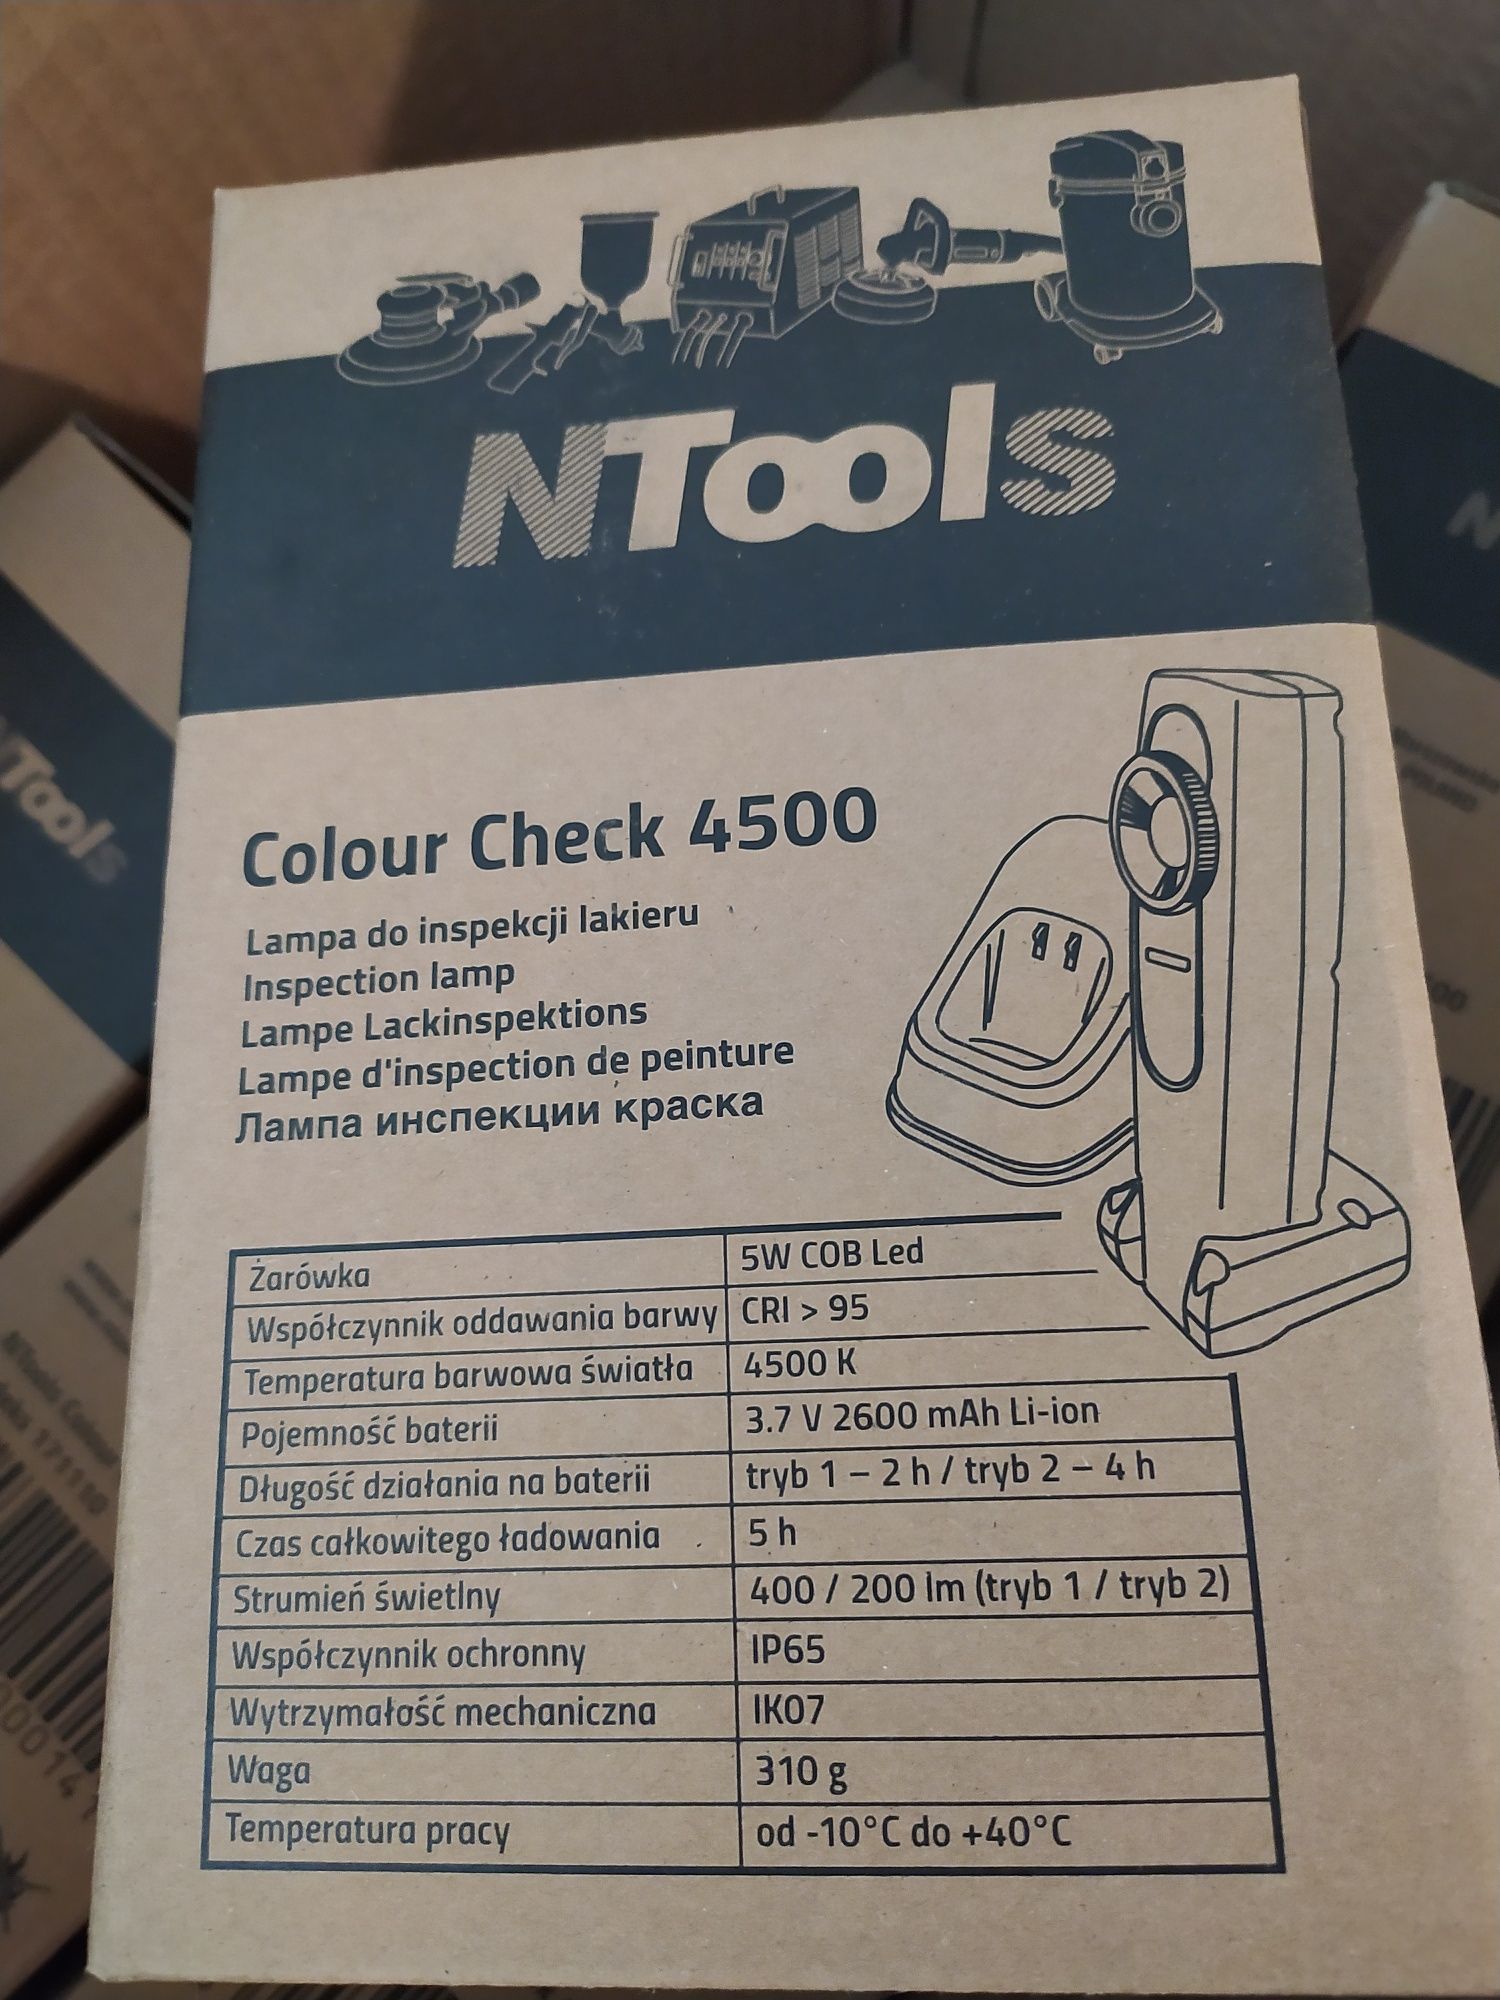 APP NTools Лампа колориста для инспекции цвета краски Colour Check 450